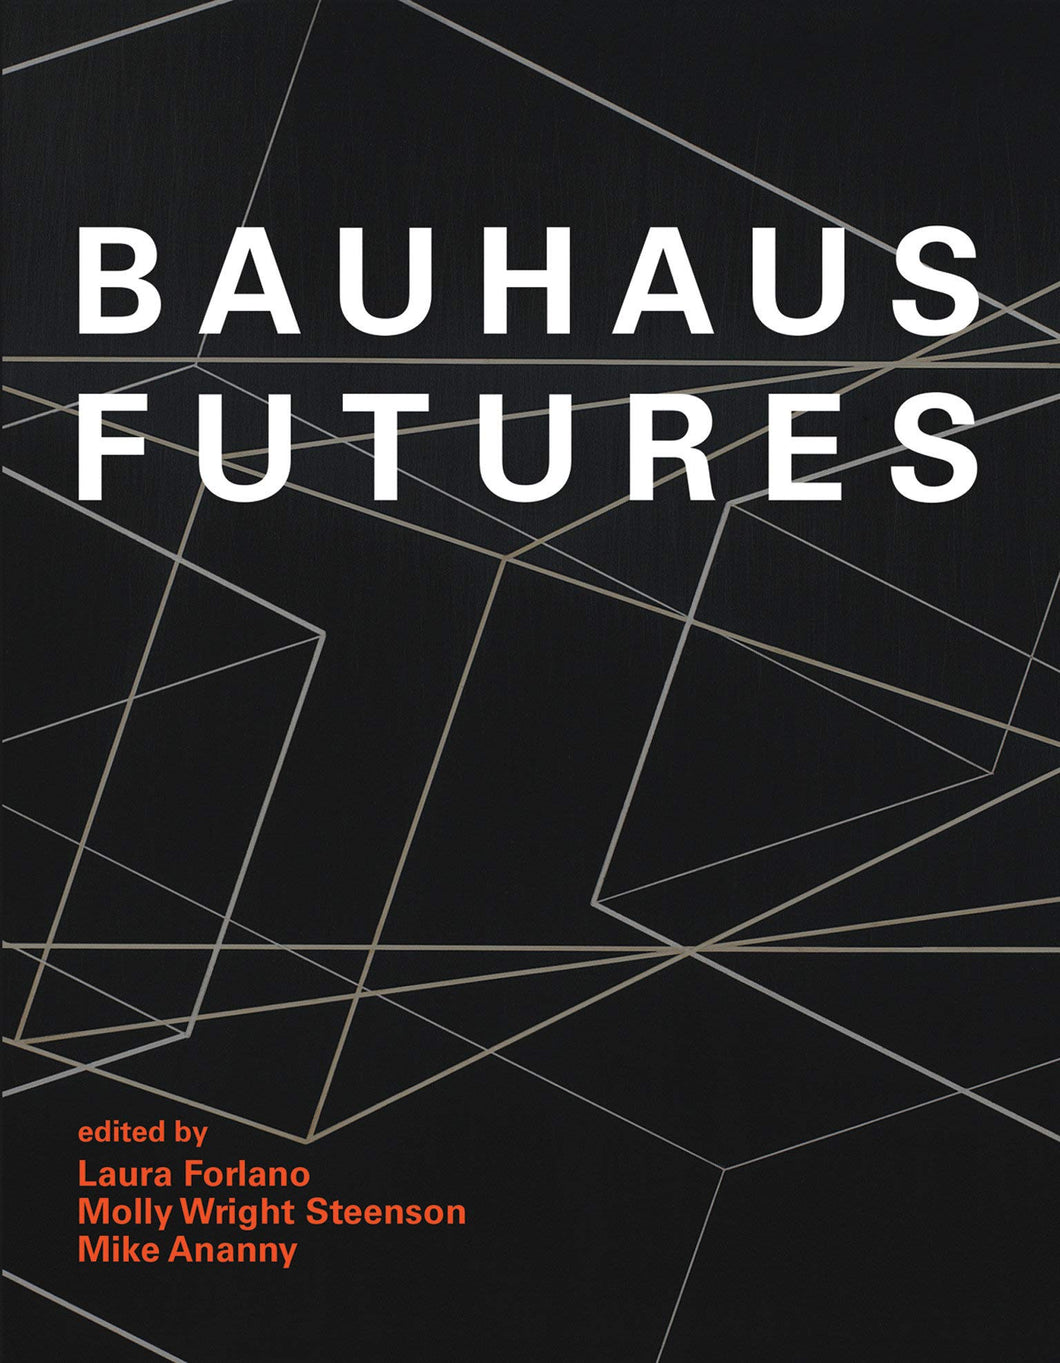 Bauhaus Futures